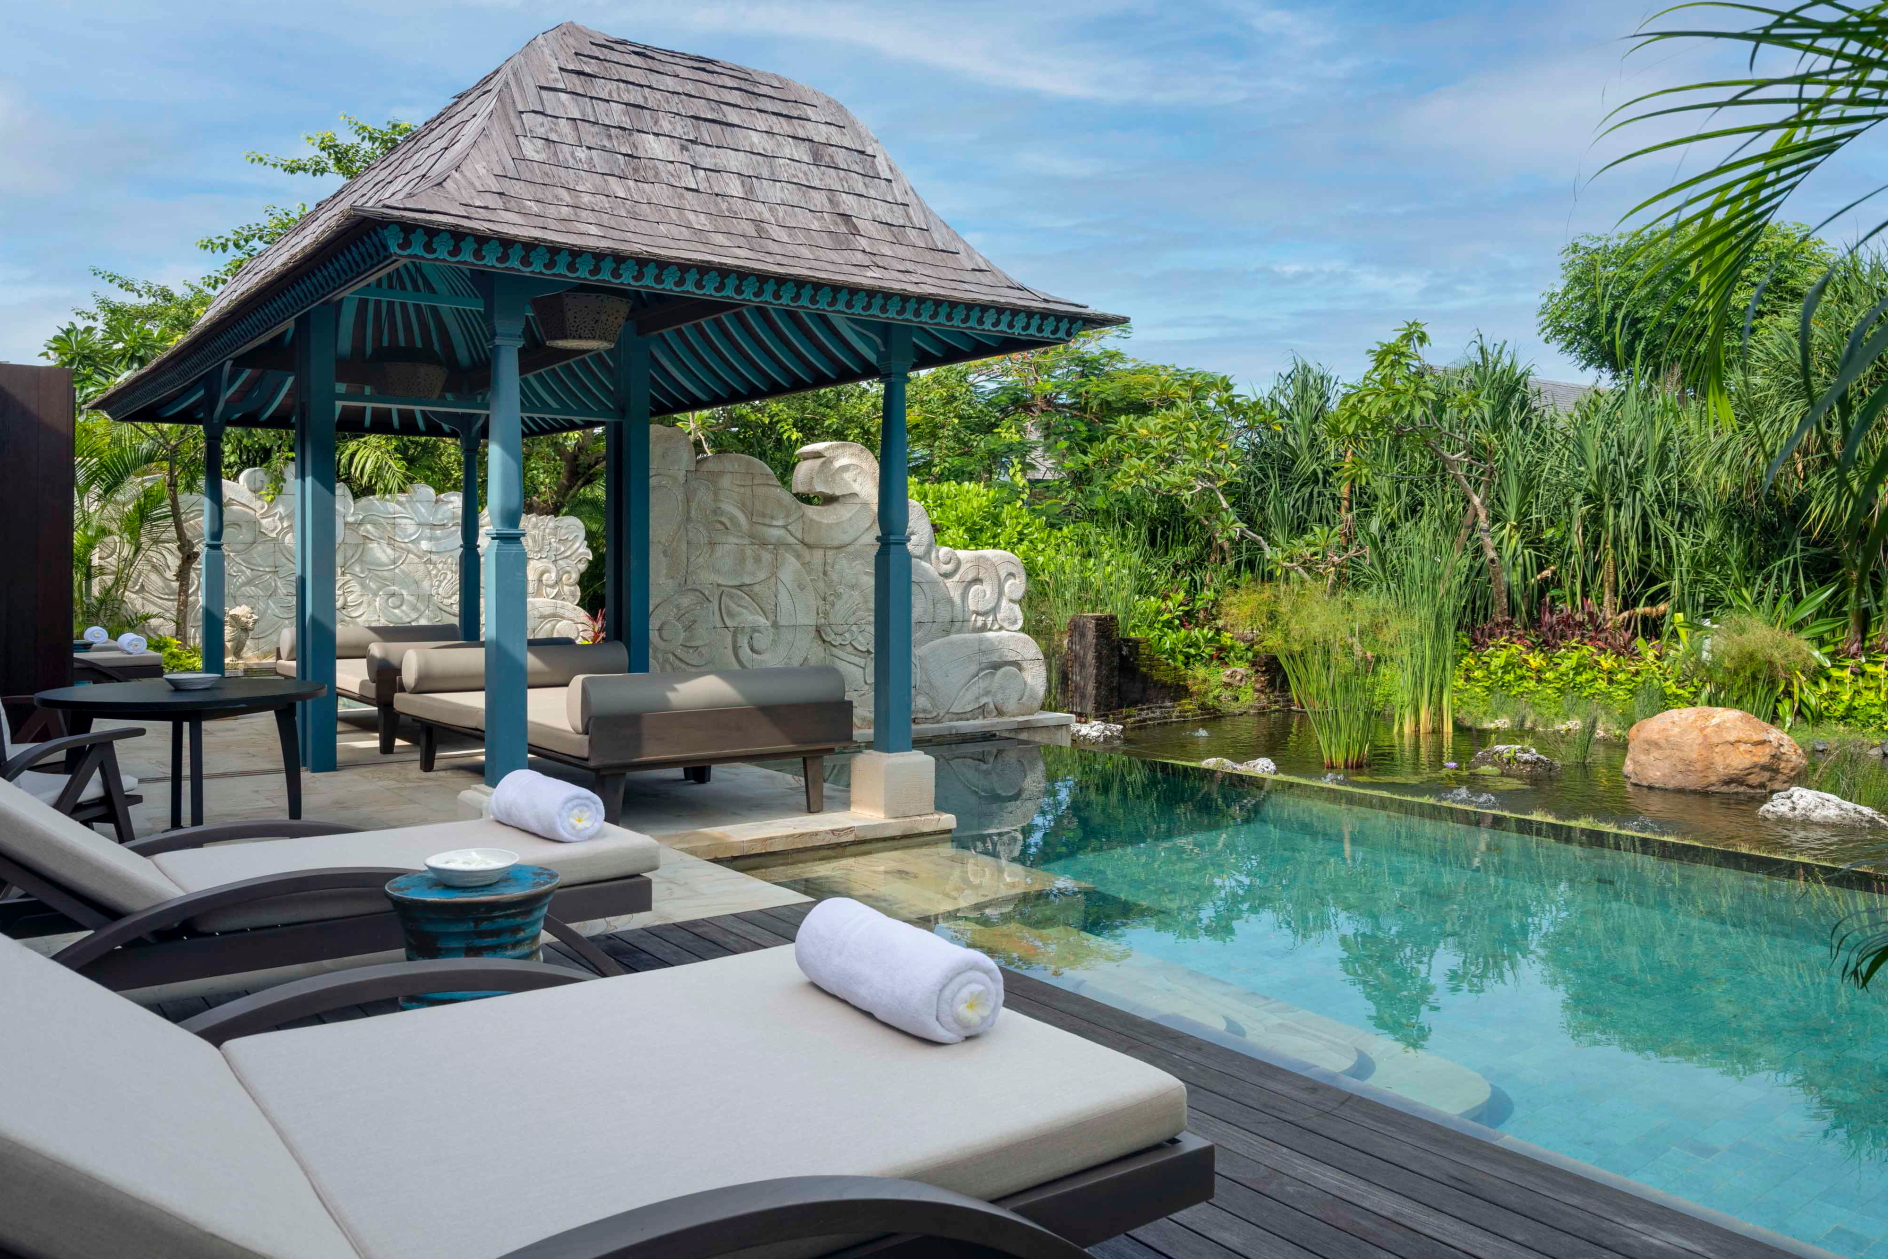 Pool of a Garden Villa at the Jumeirah Bali Resort. Click to enlarge.